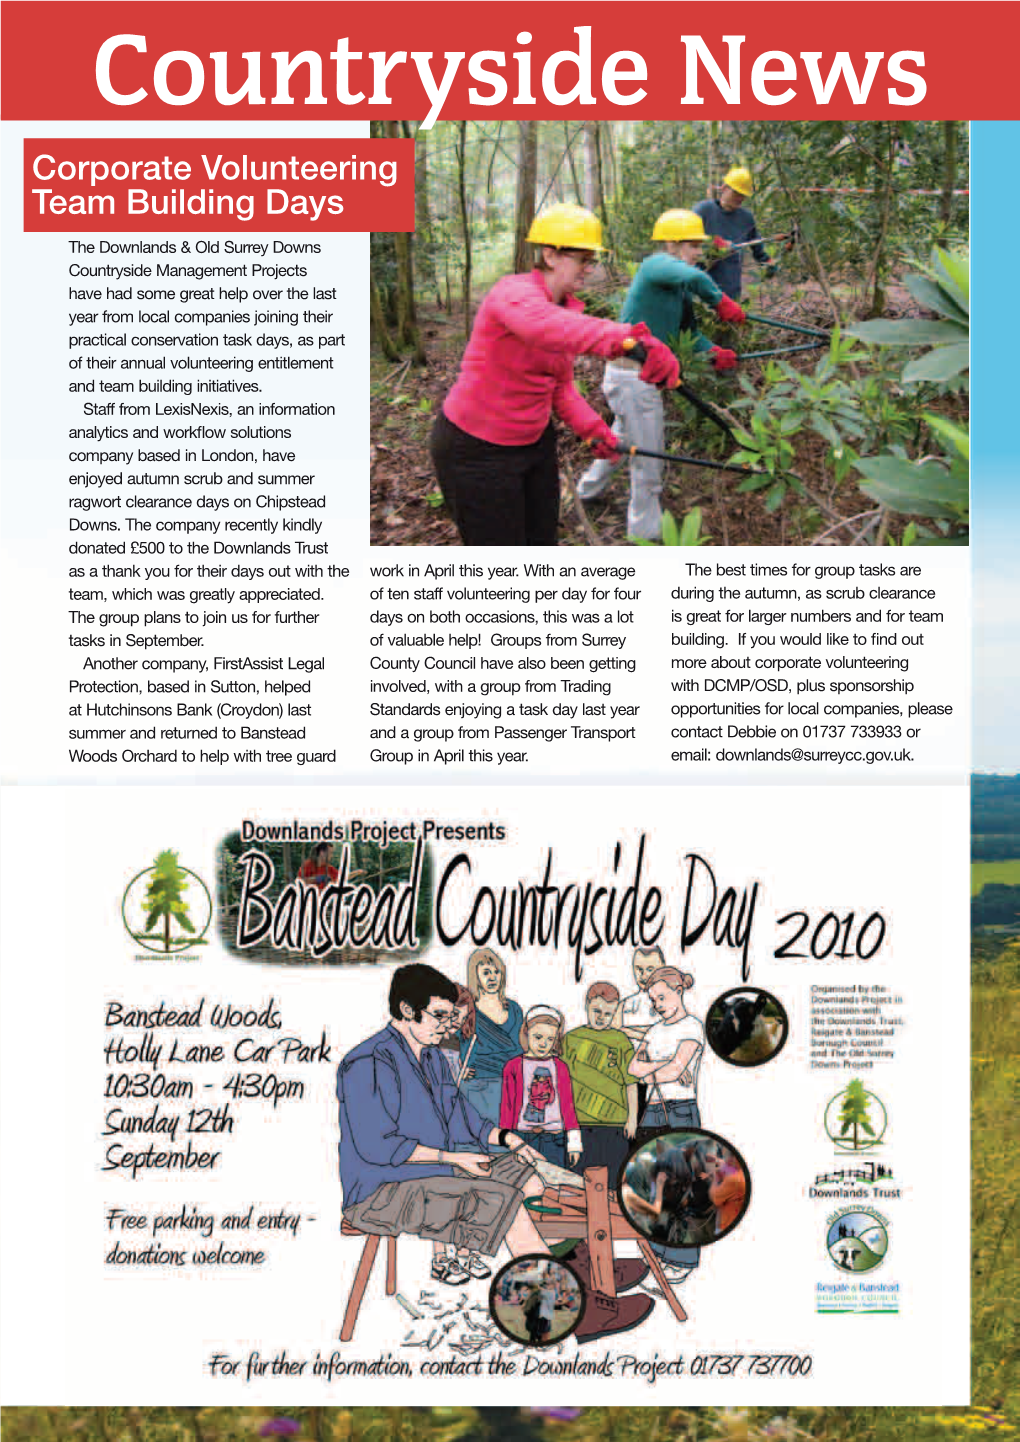 Countryside News Corporate Volunteering Team Building Days